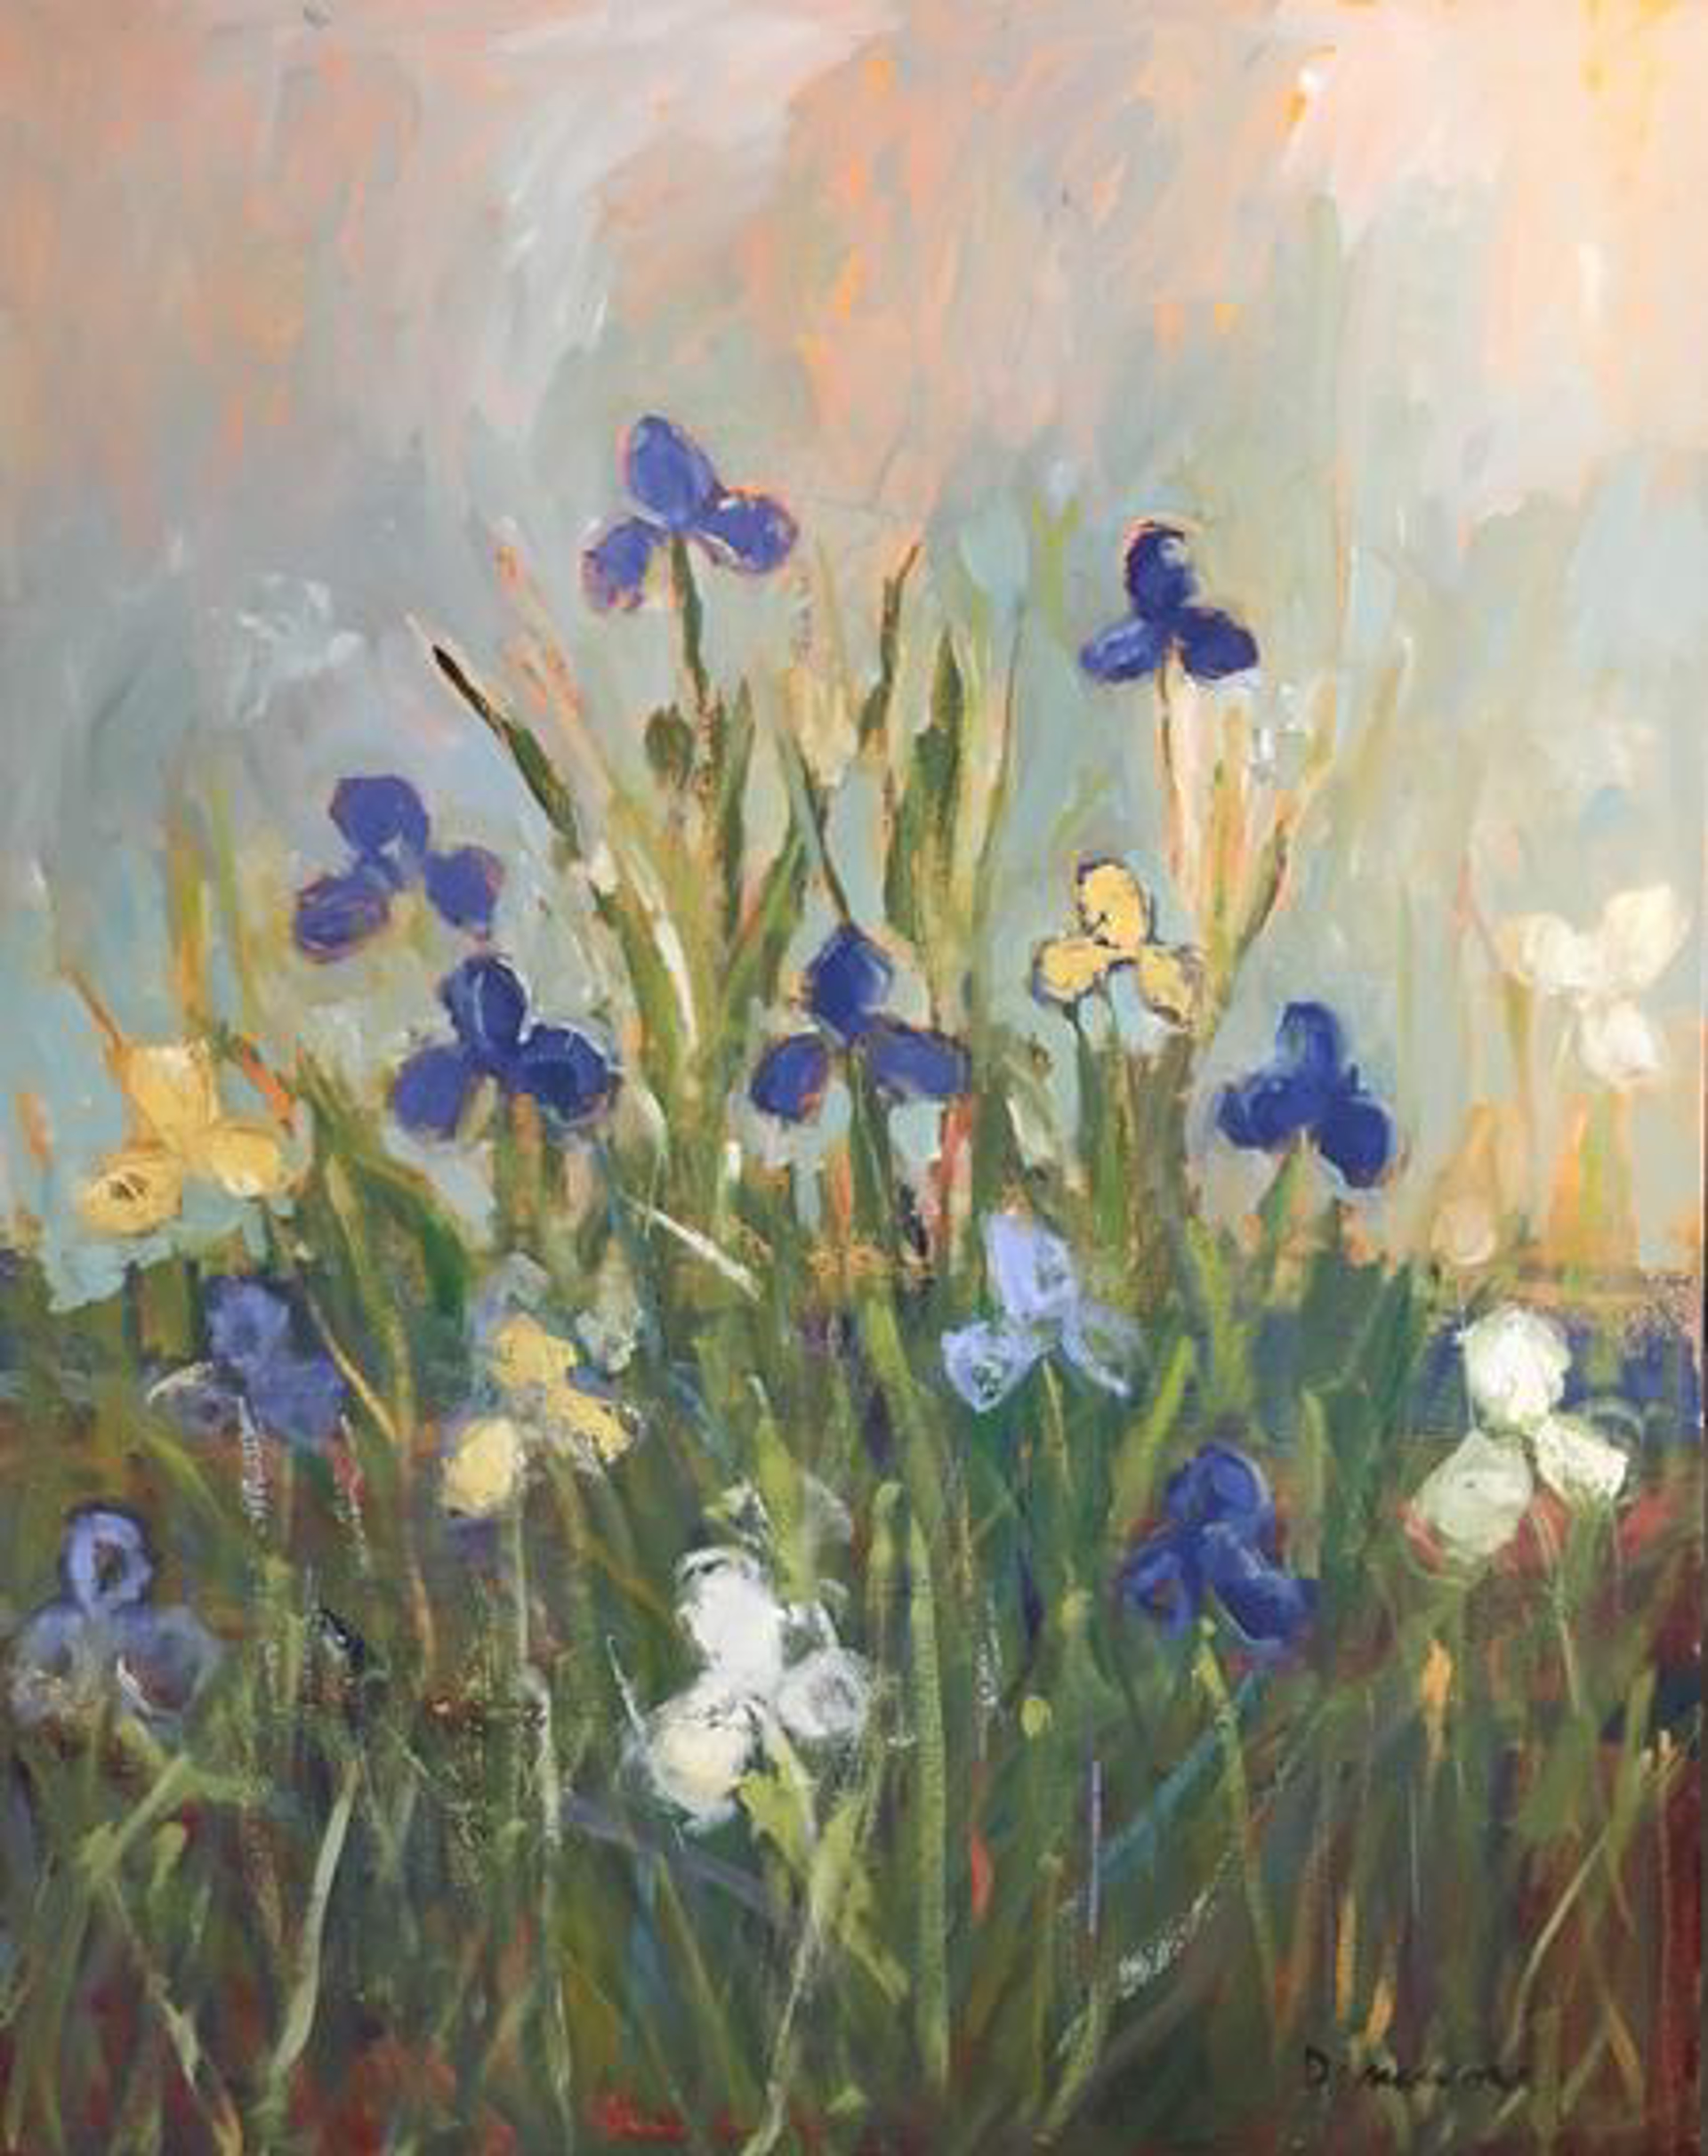 Iris in Landscape by Stephen Dinsmore